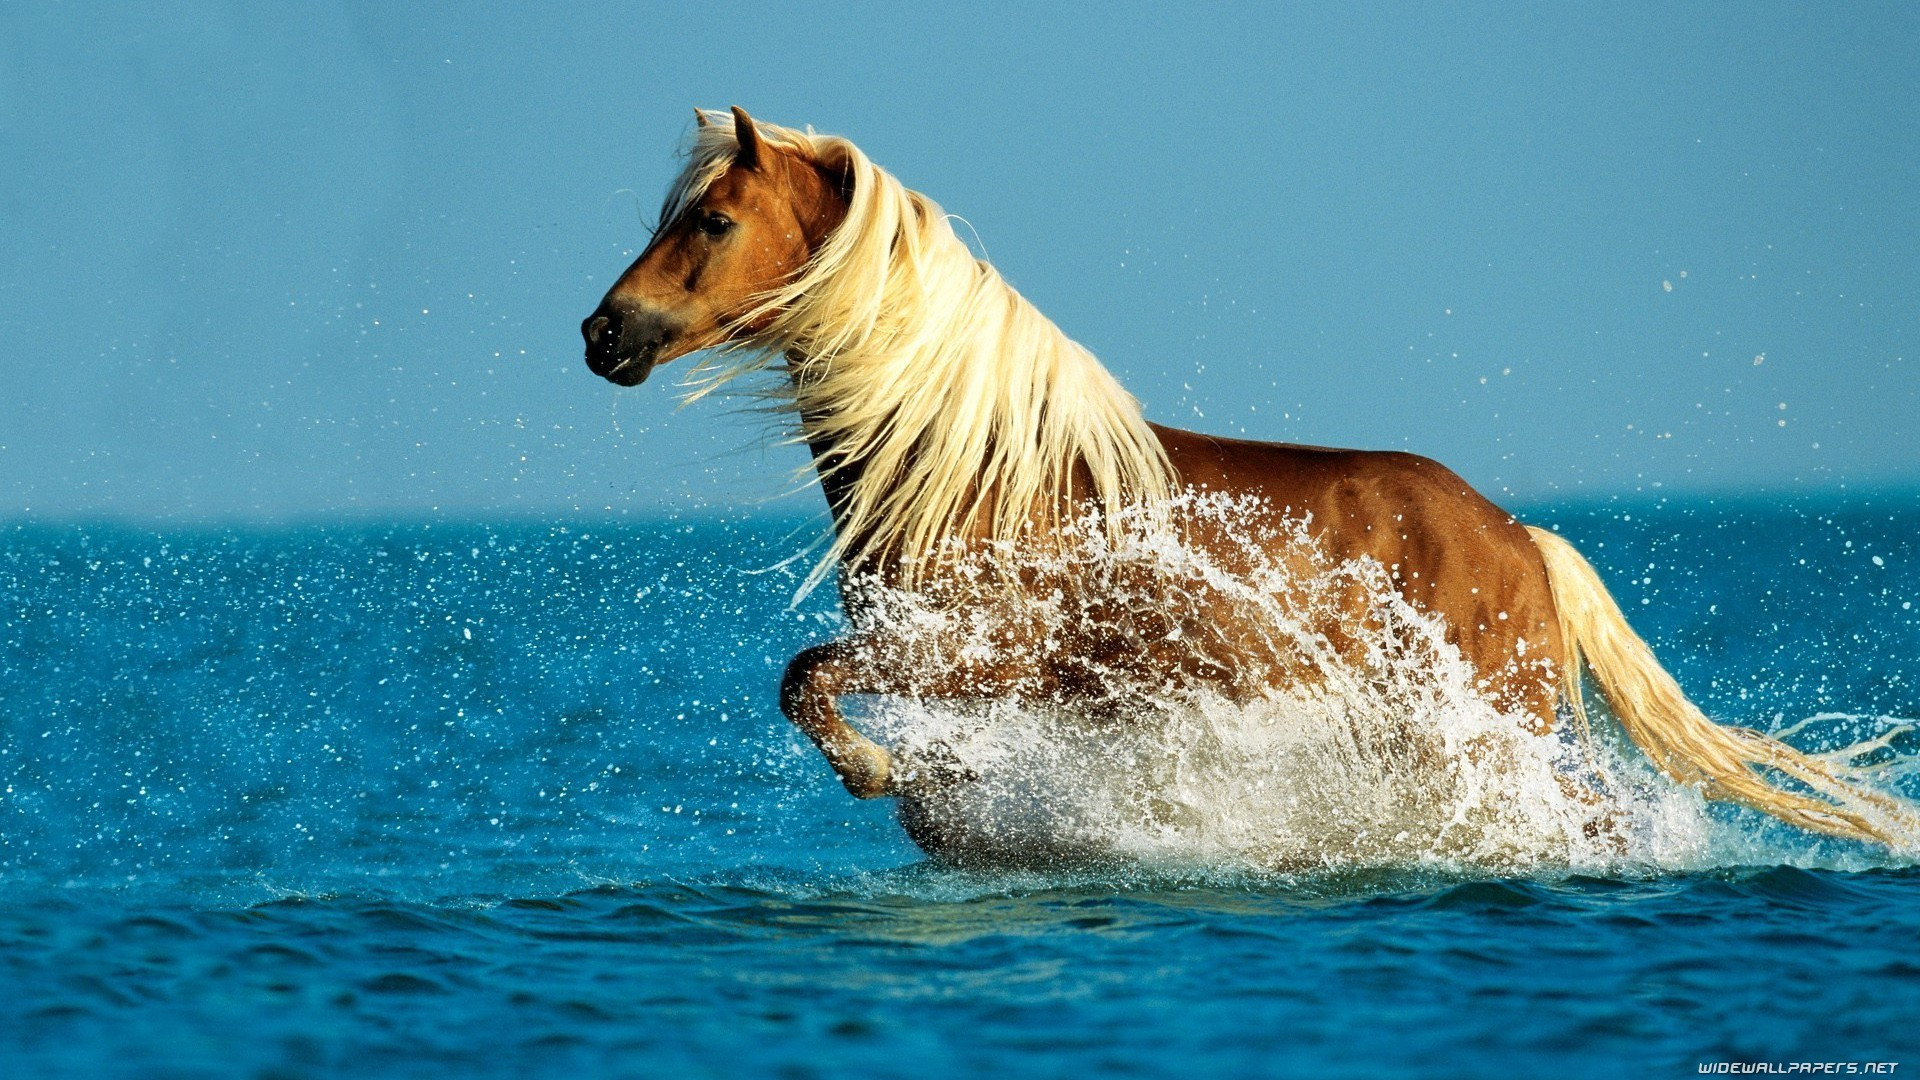 hd wallpapers 1080p widescreen nature free download,vertebrate,mammal,horse,stallion,mustang horse